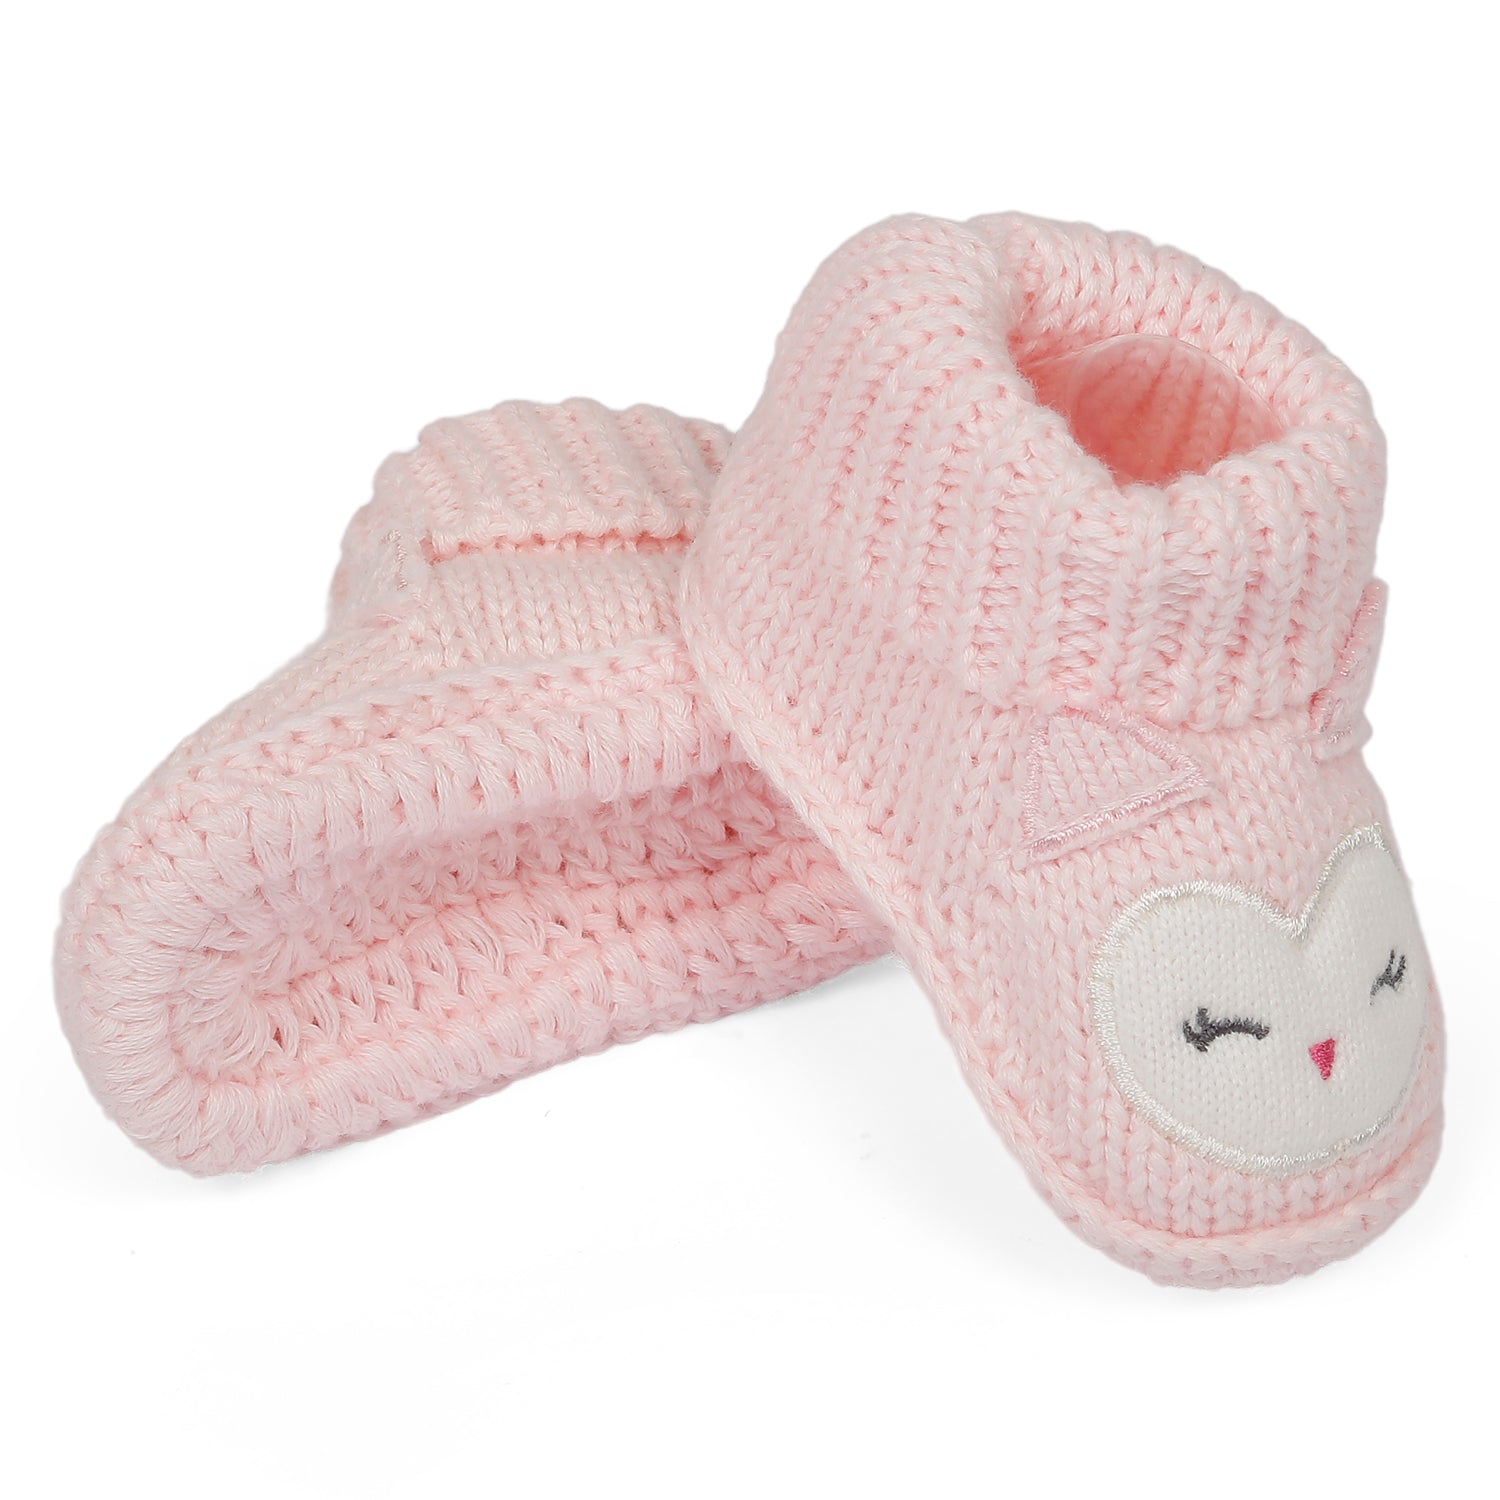 Baby Moo Blushing Newborn Crochet Socks Booties - Pink